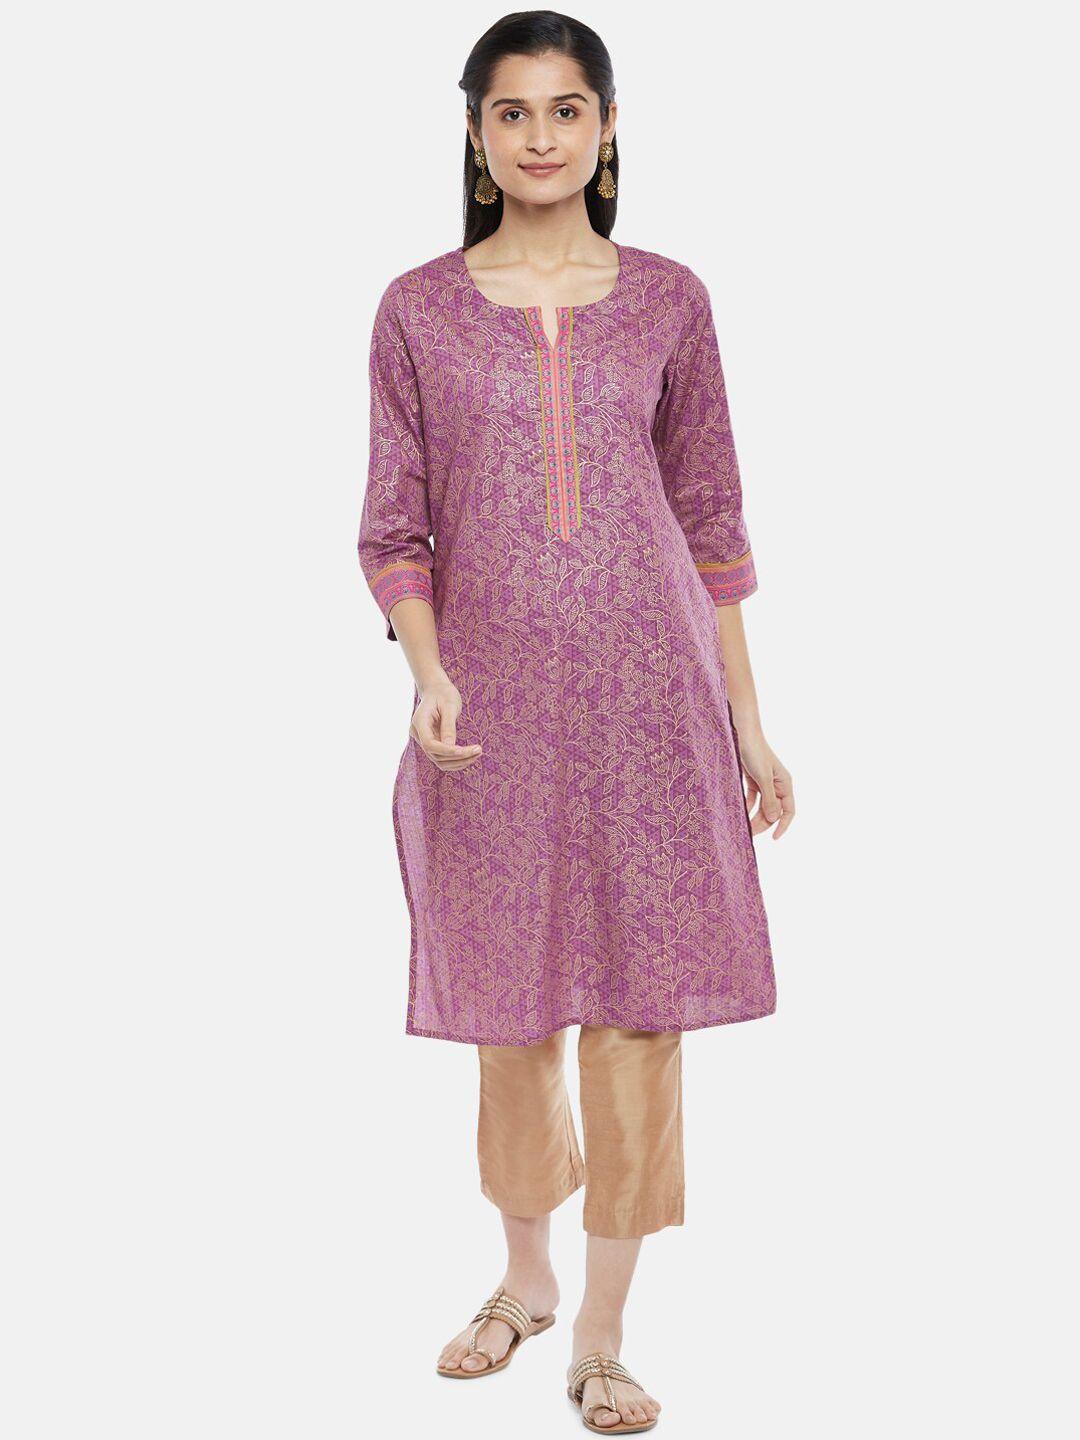 rangmanch by pantaloons women purple ethnic motifs printed cotton kurta